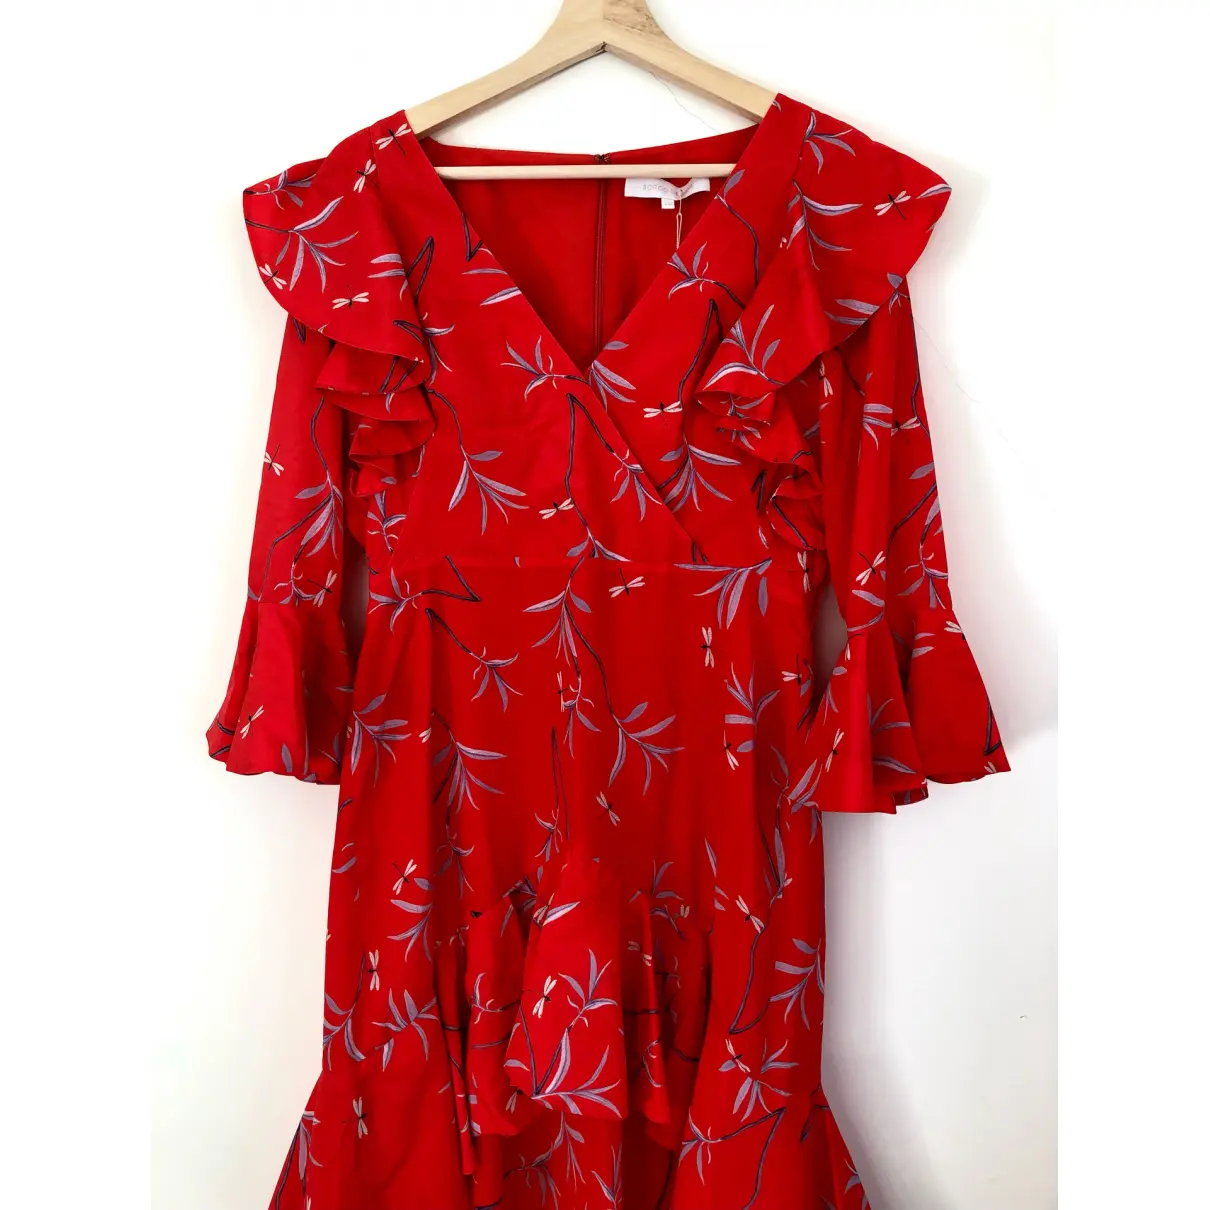 Buy Borgo De Nor Mid-length dress online